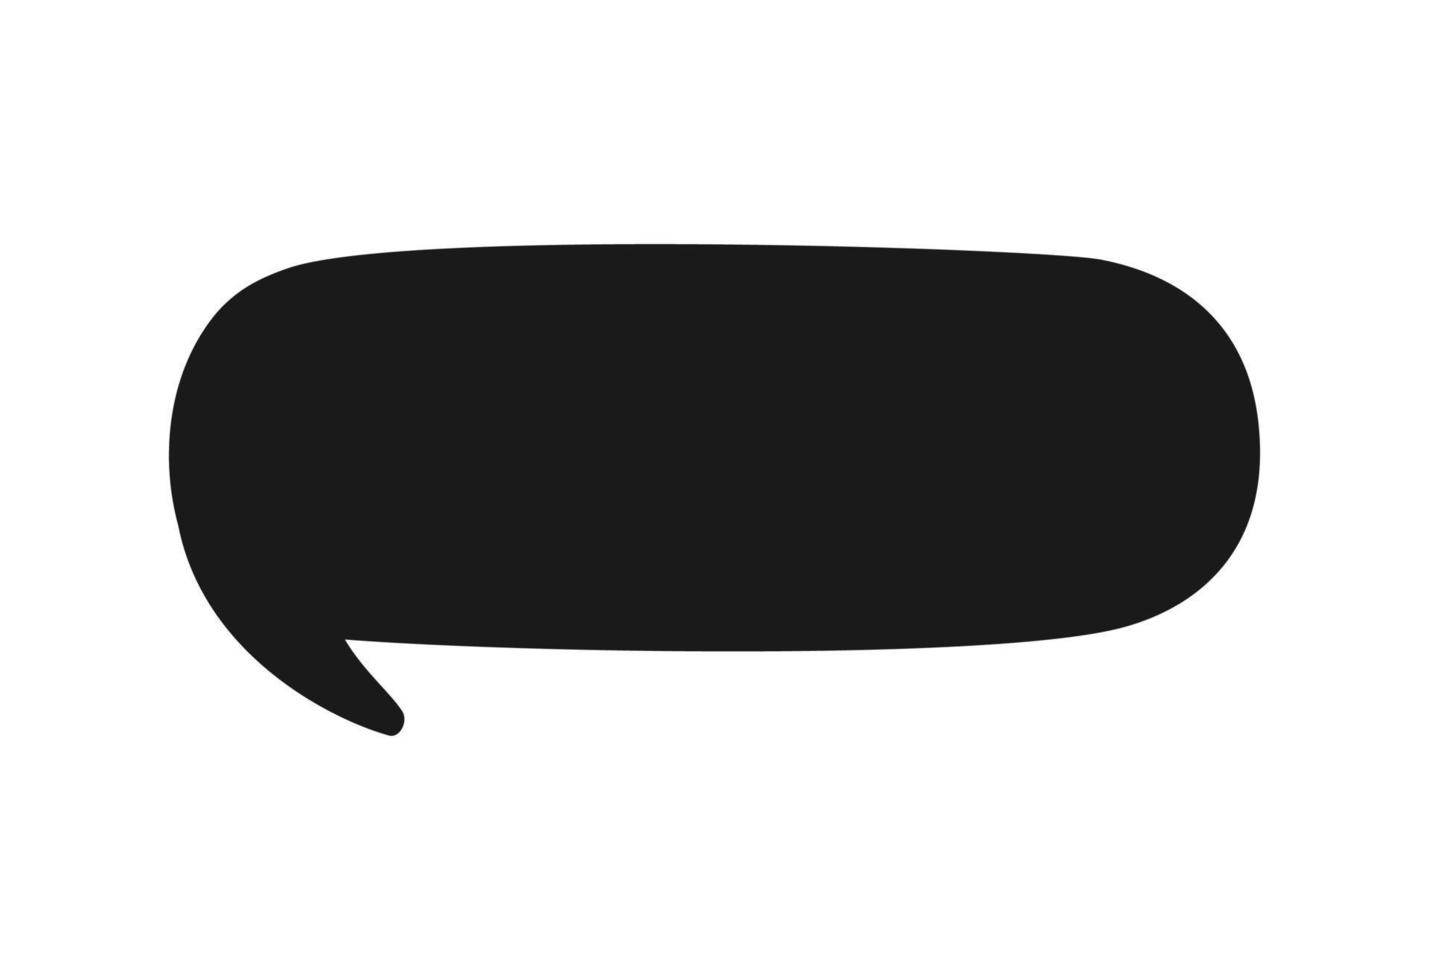 Hand Drawn Comics Style Speech Bubbles Silhouette Icon. Simple Flat Vector Illustration.